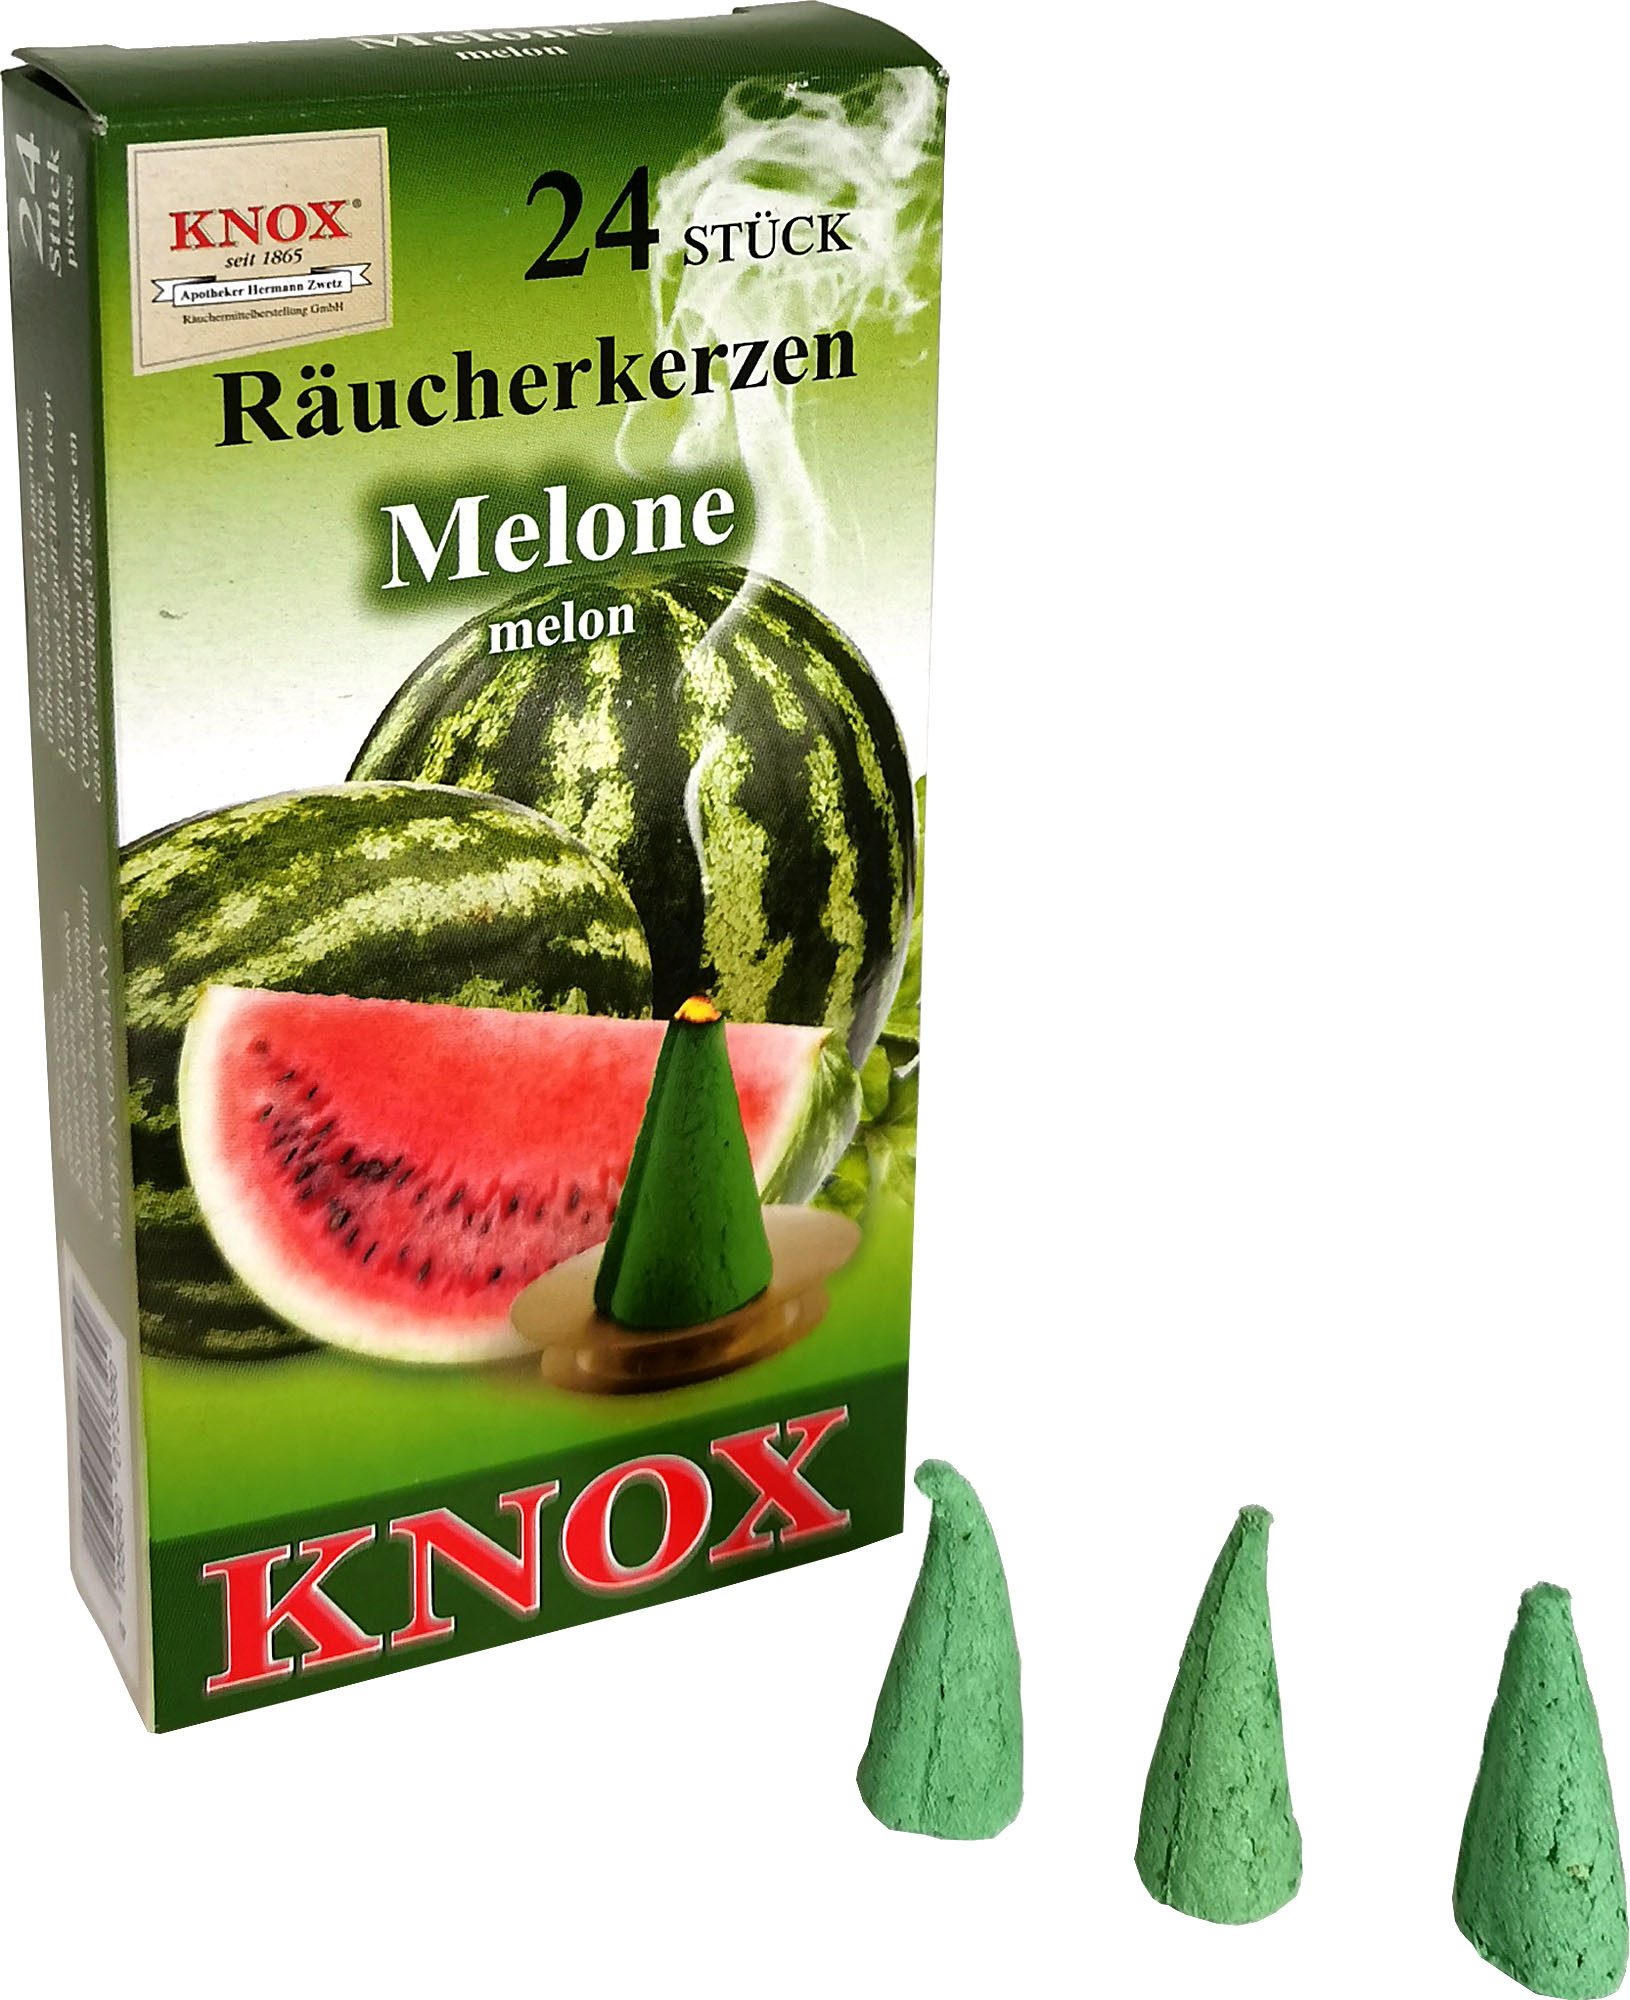 KNOX Räucherkerzen - Melone